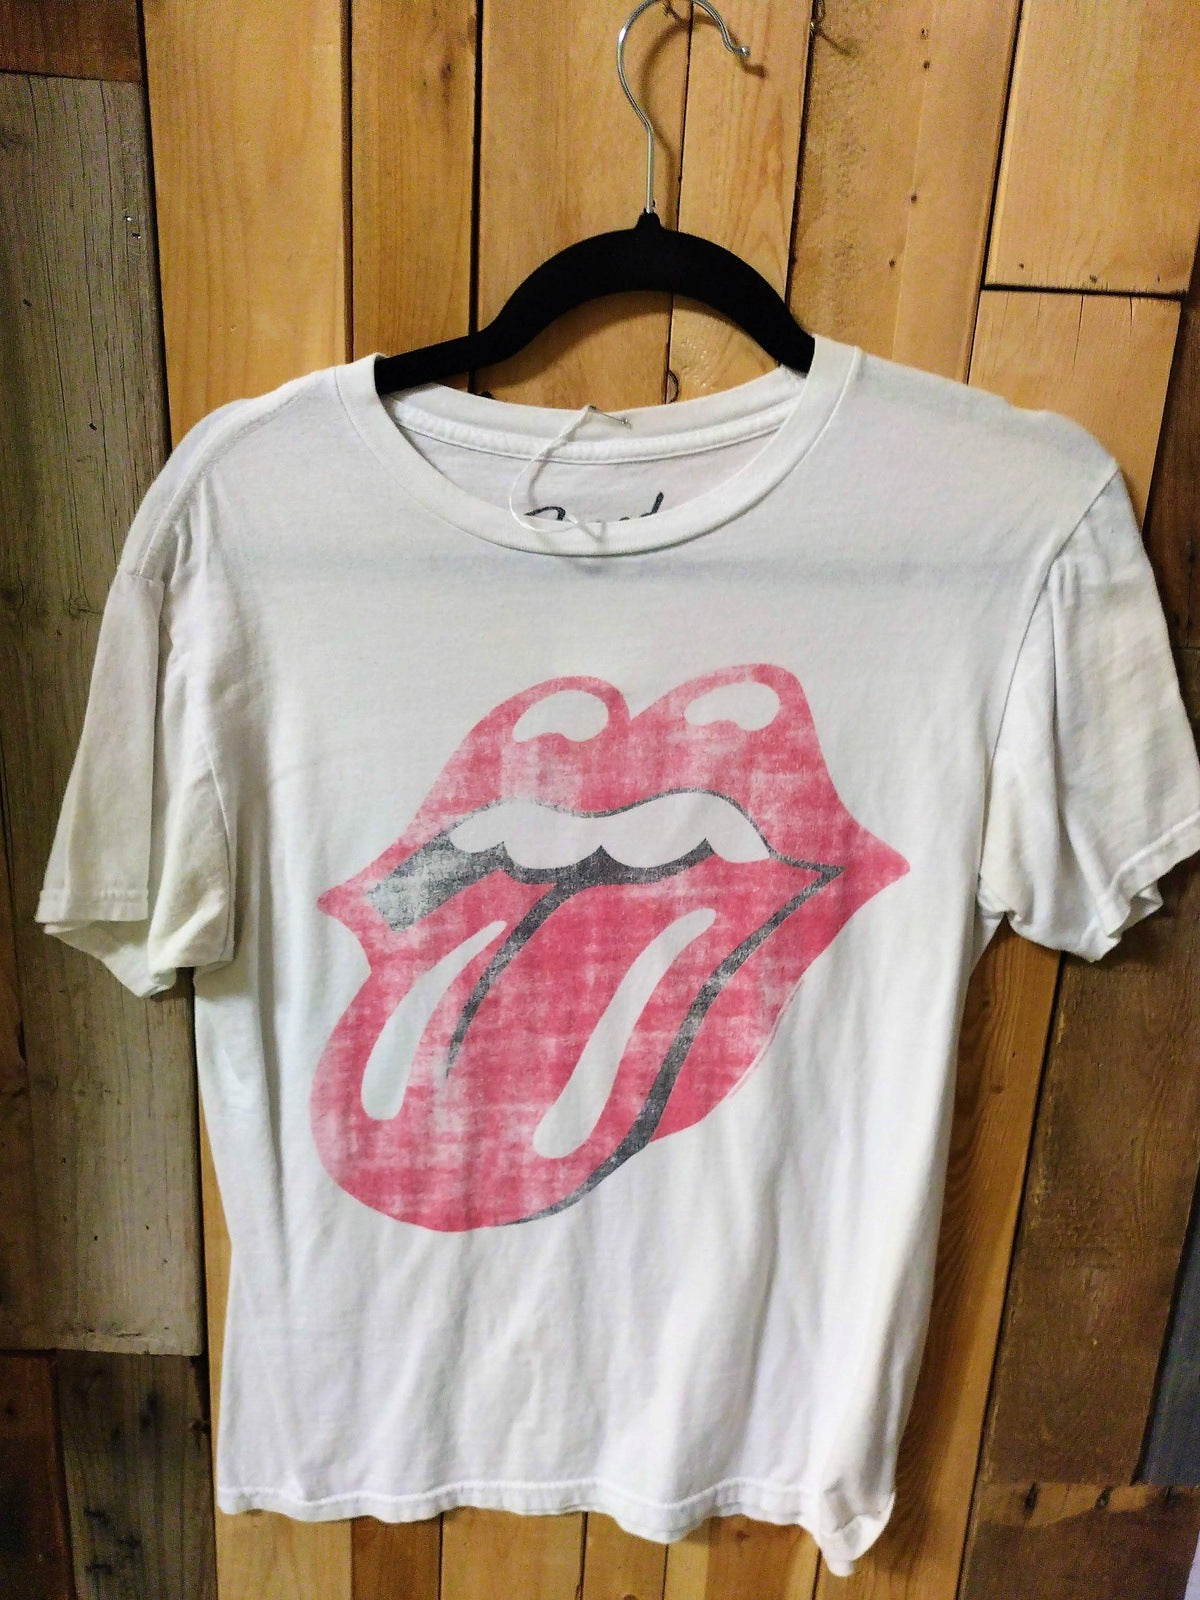 Rolling Stones "Bravado" Women's T Shirt Size Small